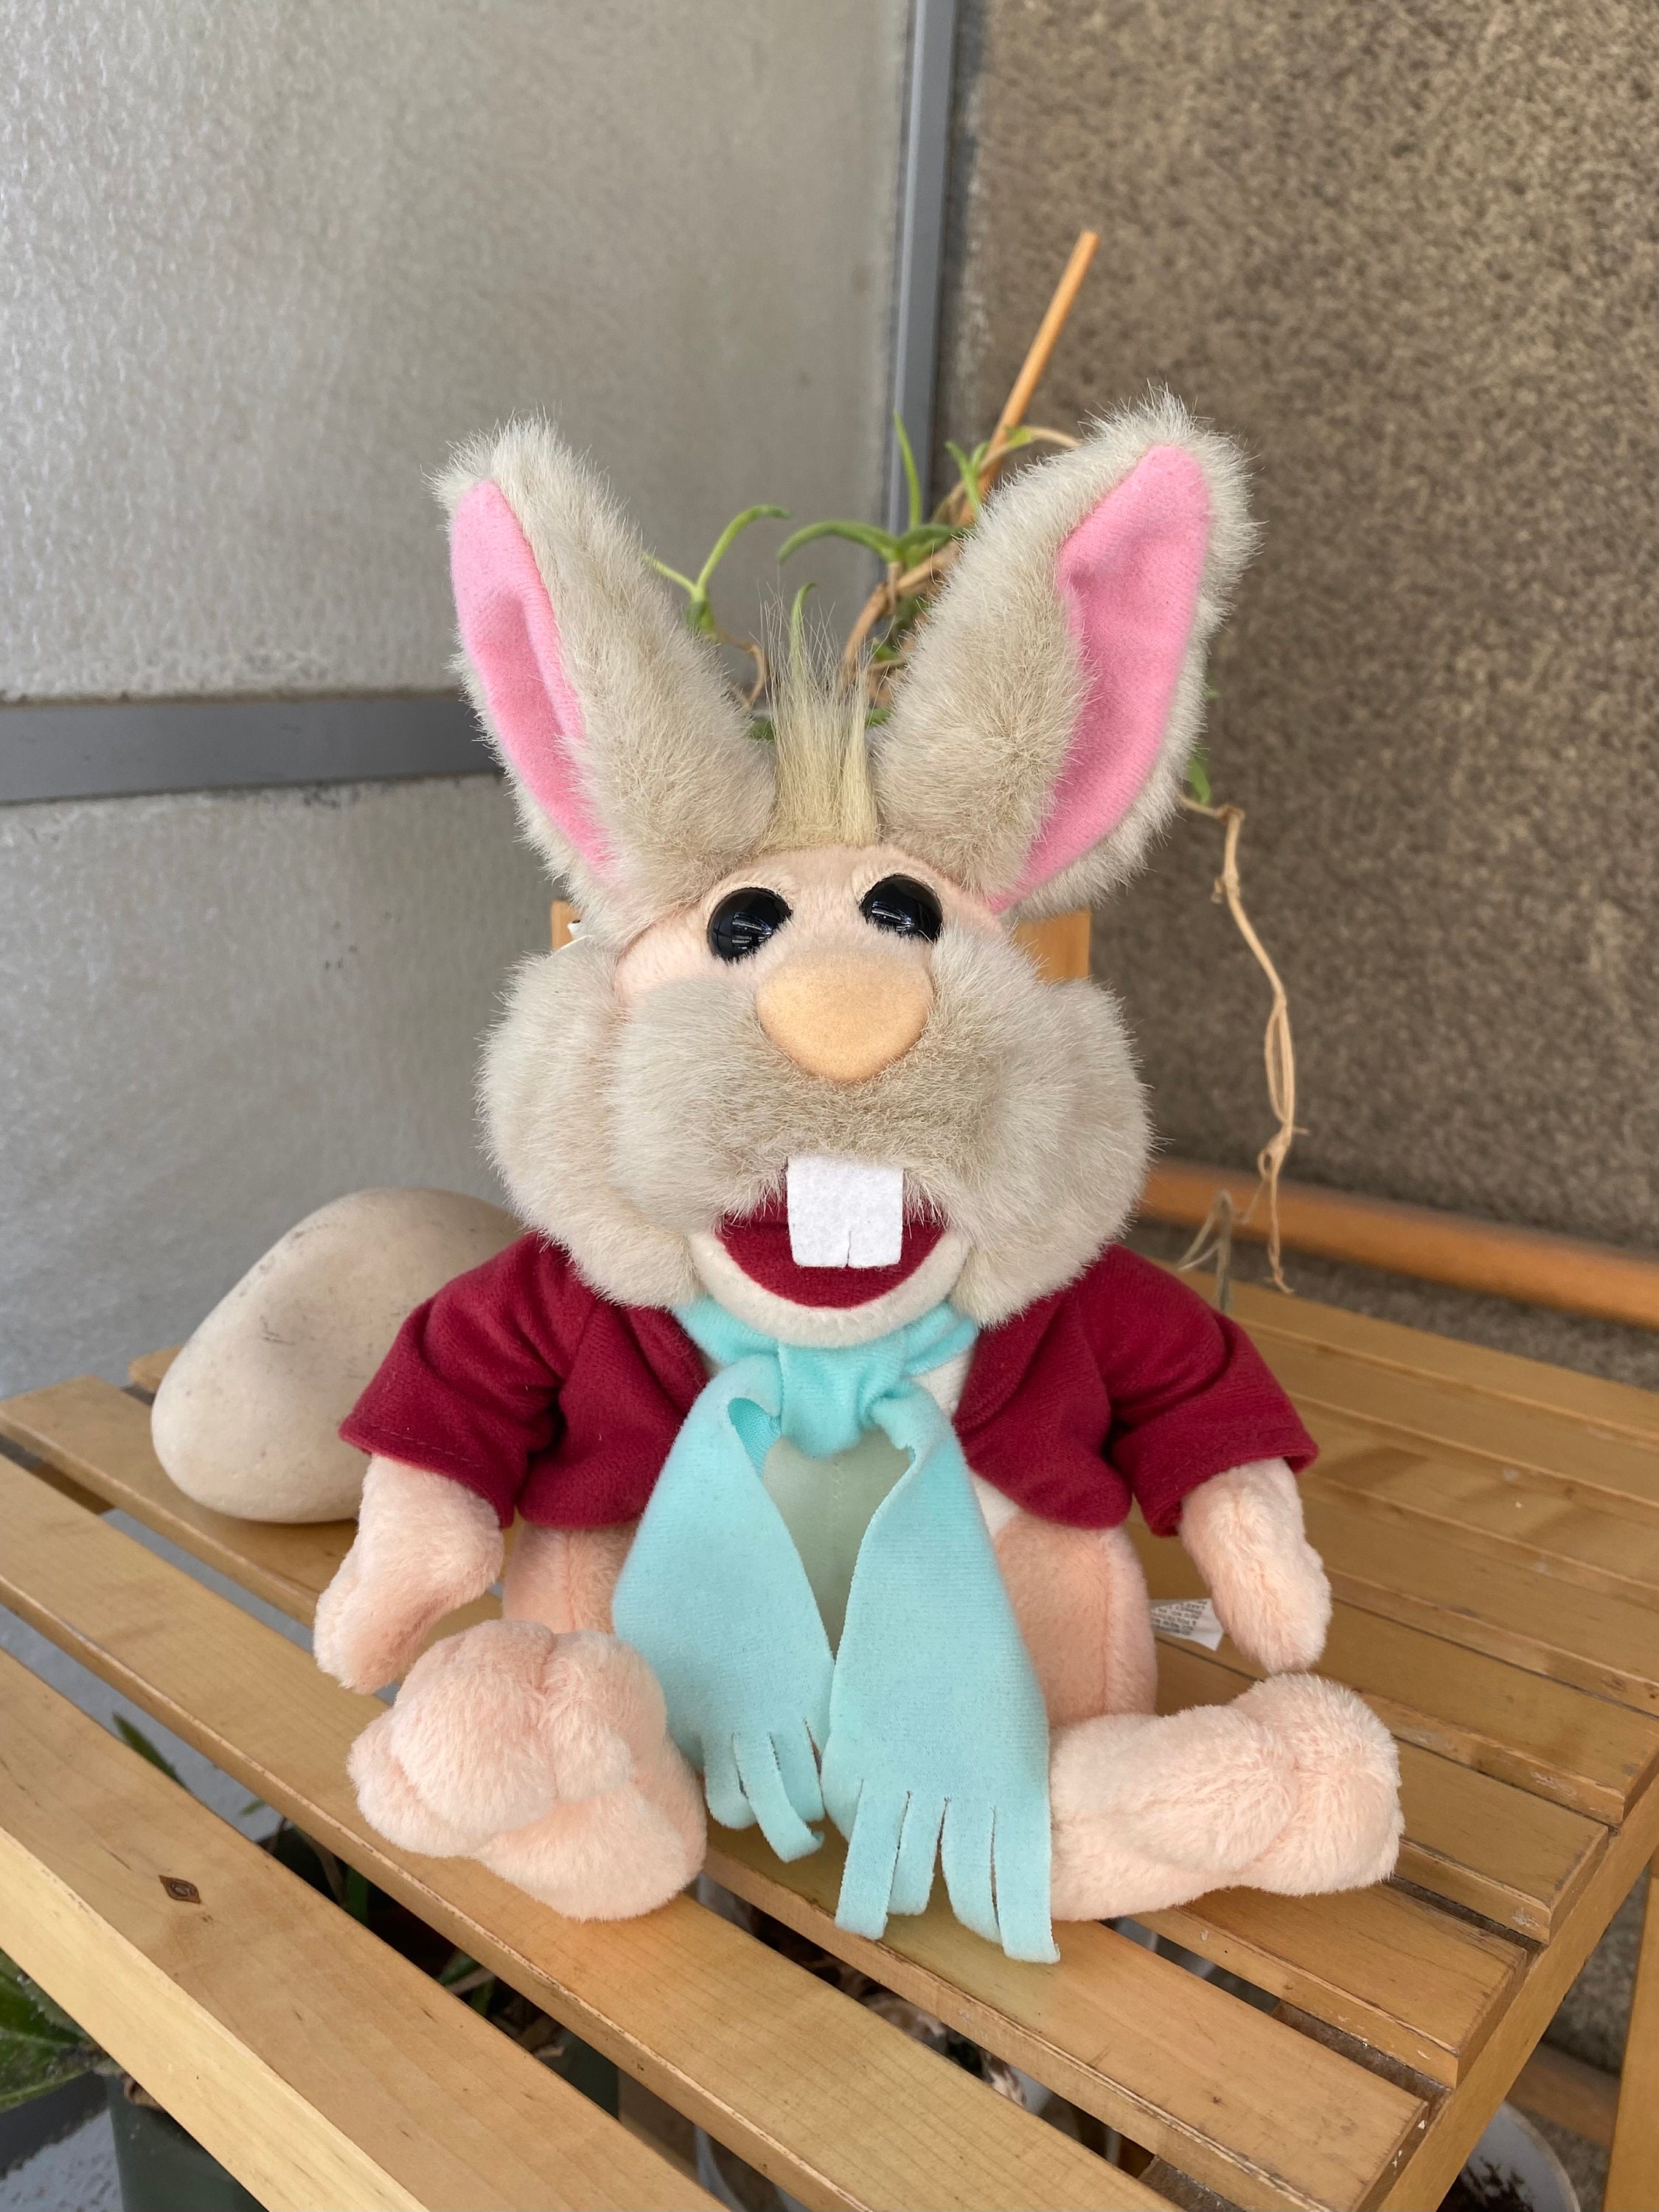 Jim Henson Bean Bunny muppet peluche, super mignon lapin en